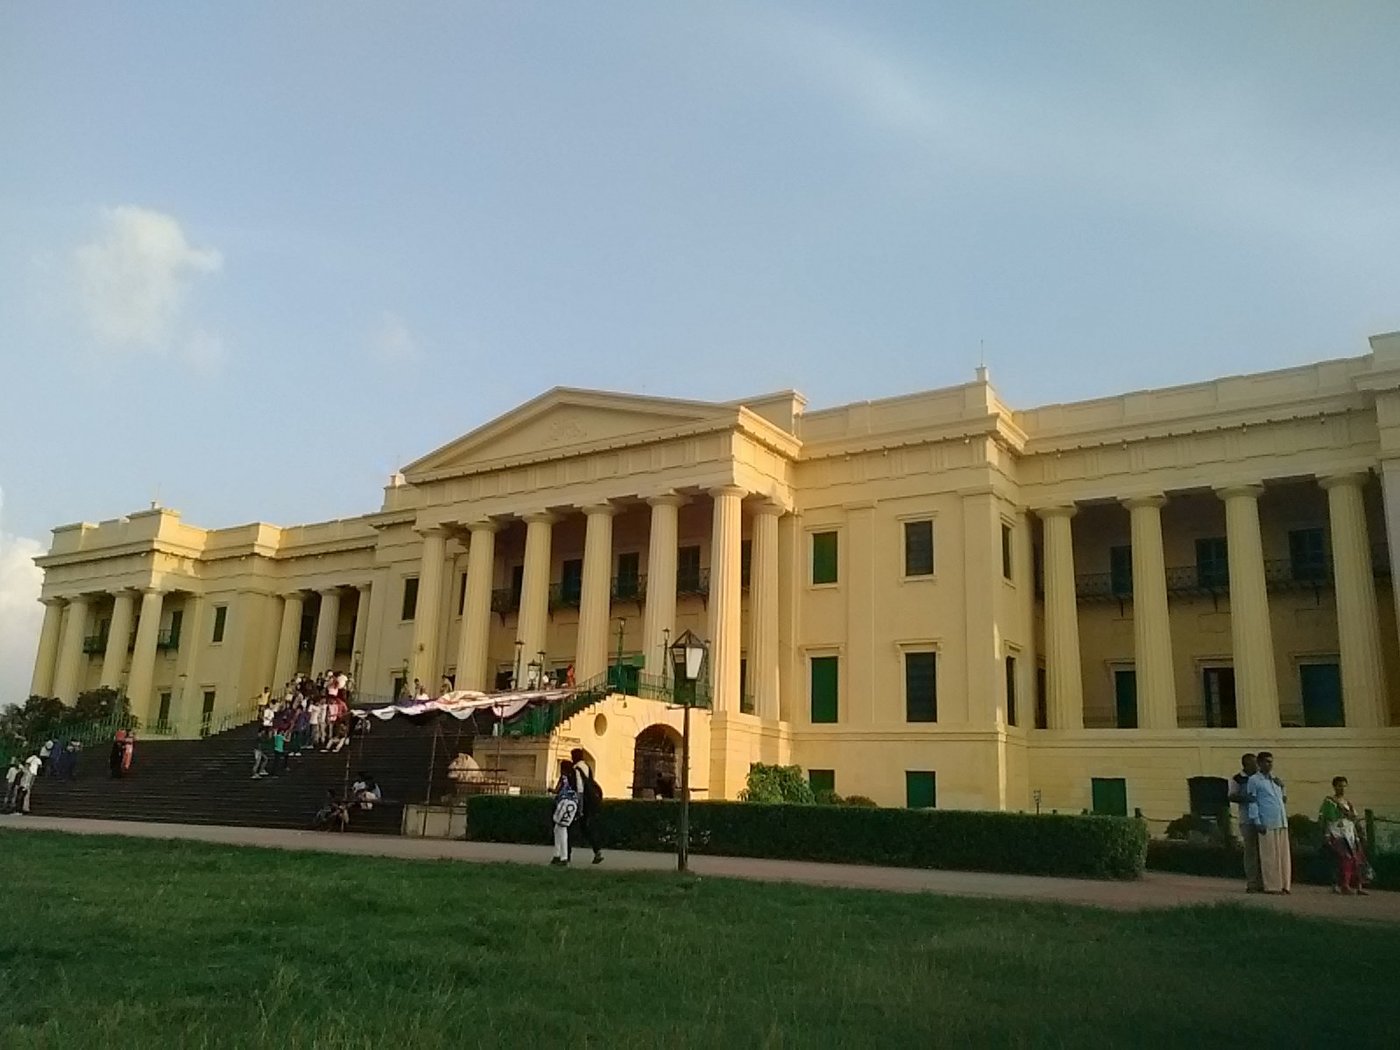 The restored Hazarduari Palace of the Nawabs of Bengal, Murshidabad